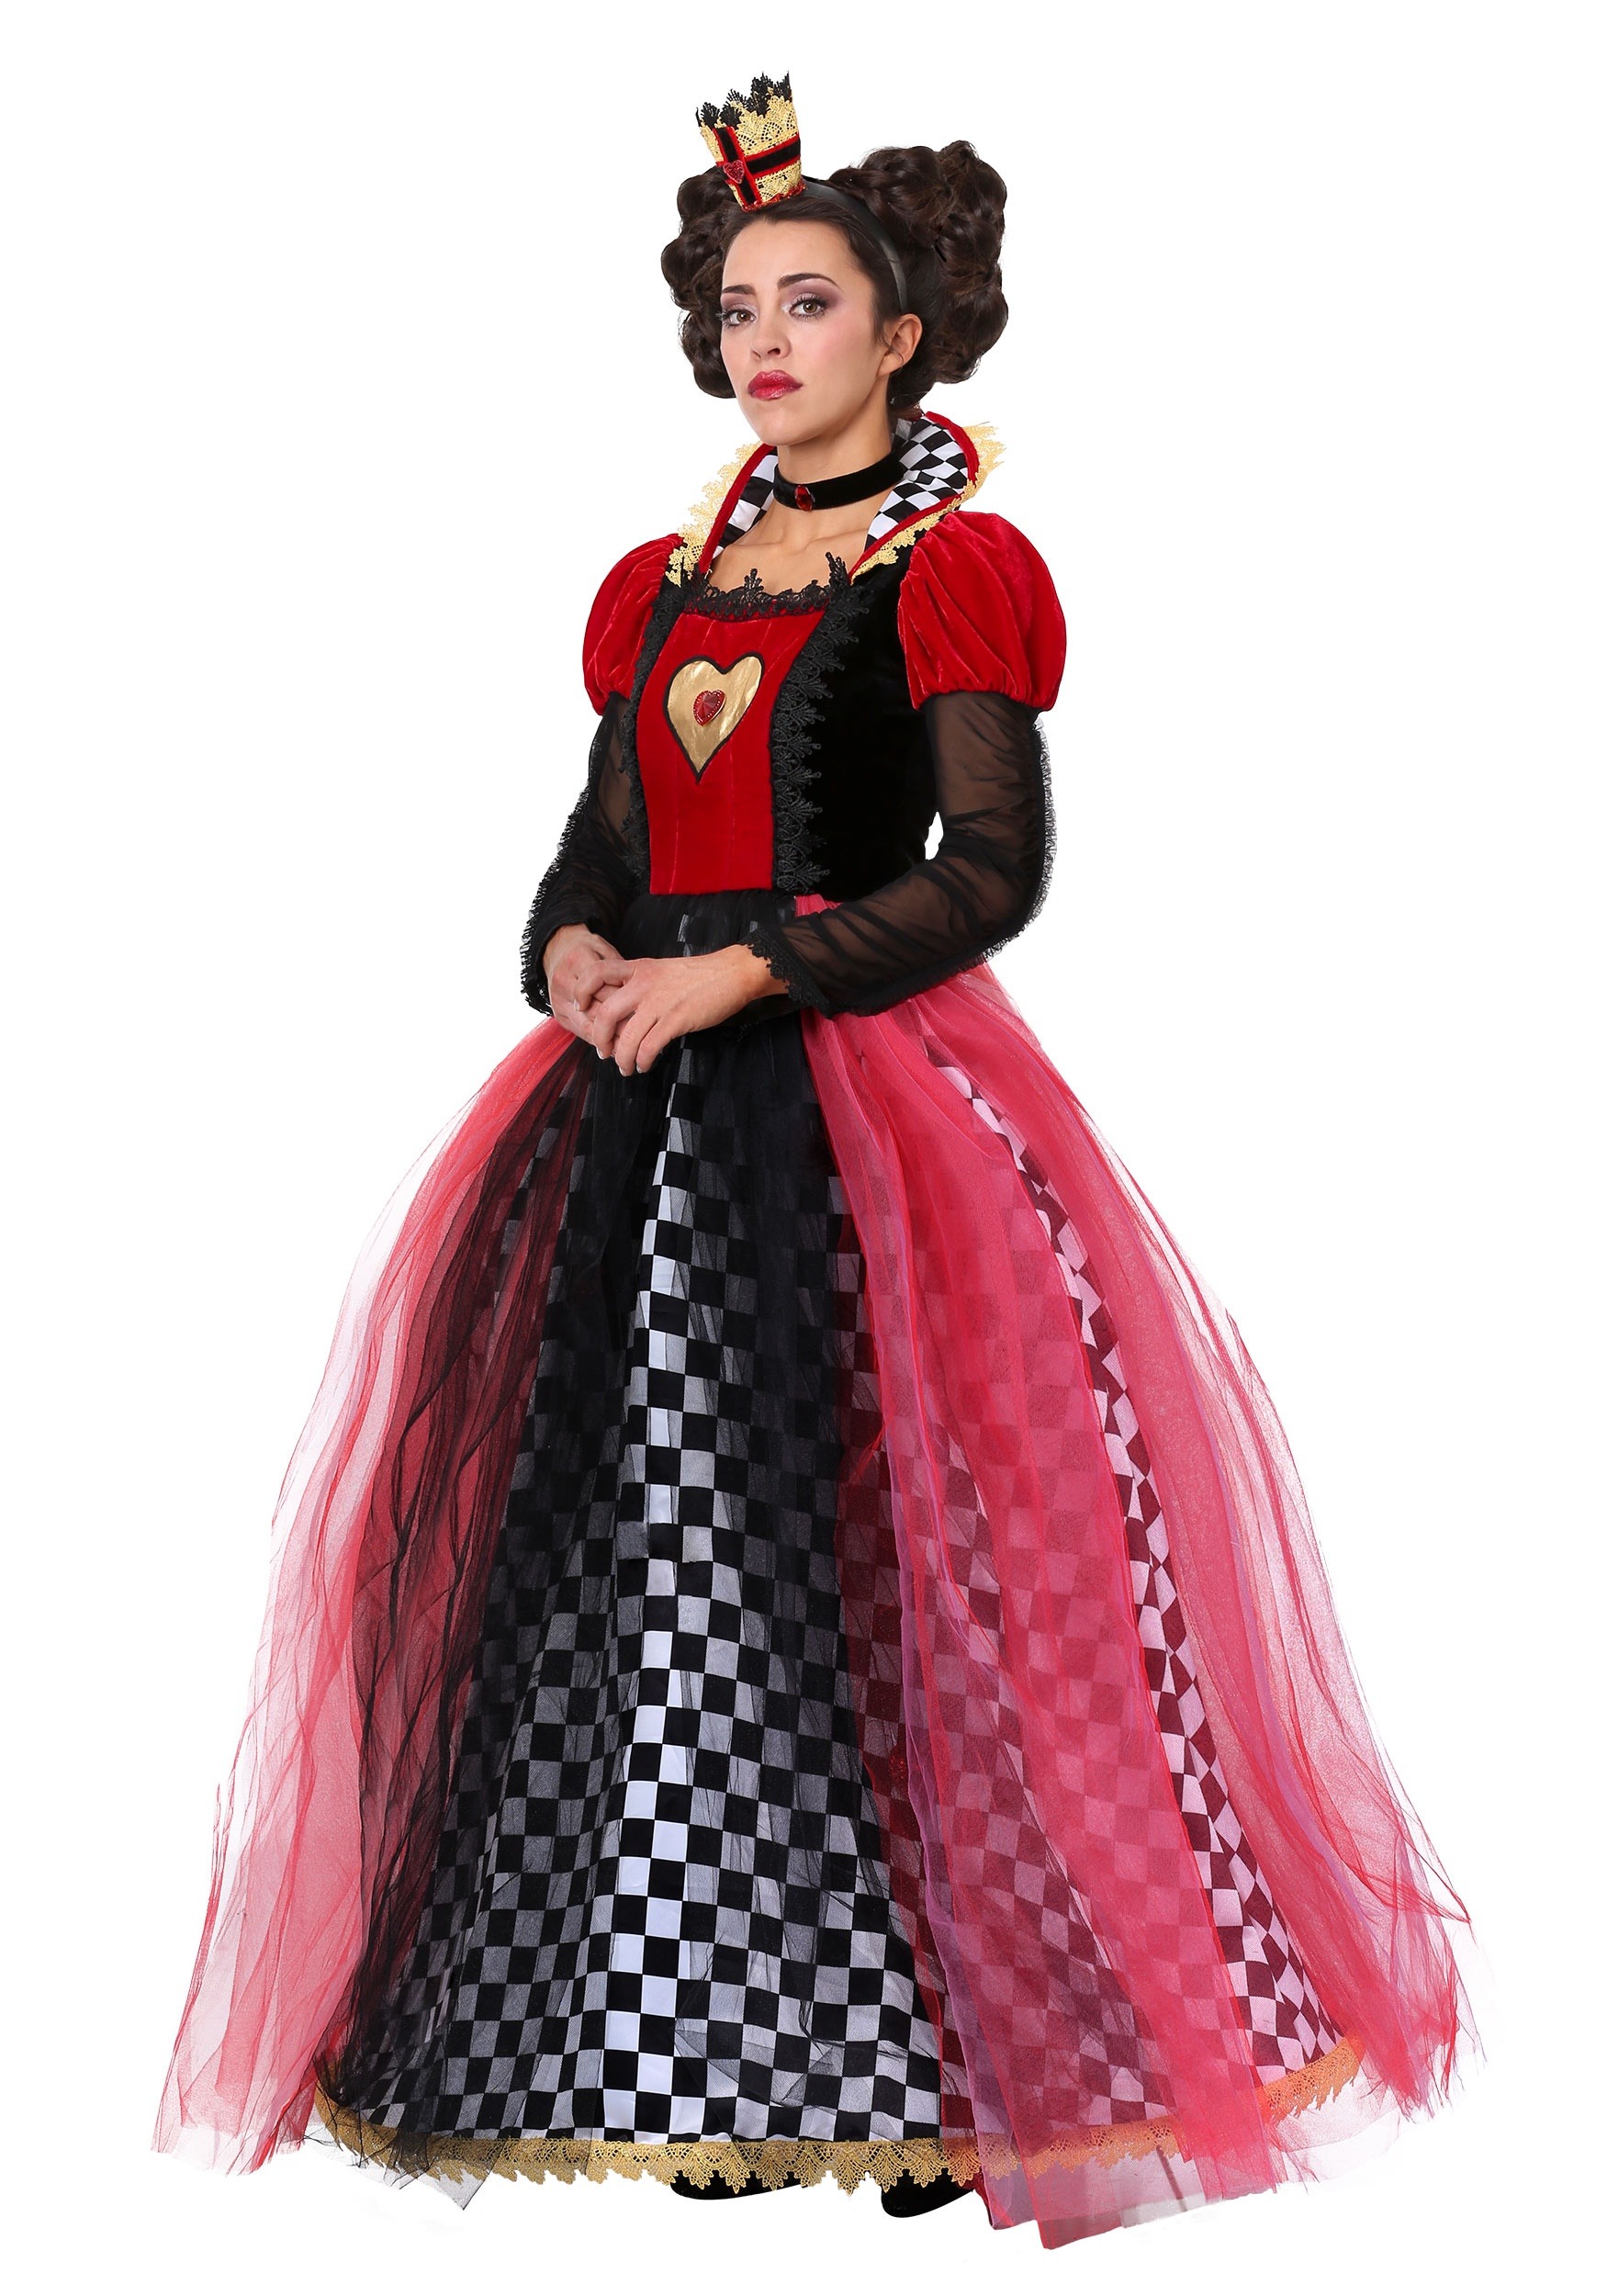 Photos - Fancy Dress FUN Costumes Women's Ravishing Queen of Hearts Costume Black/Red/W